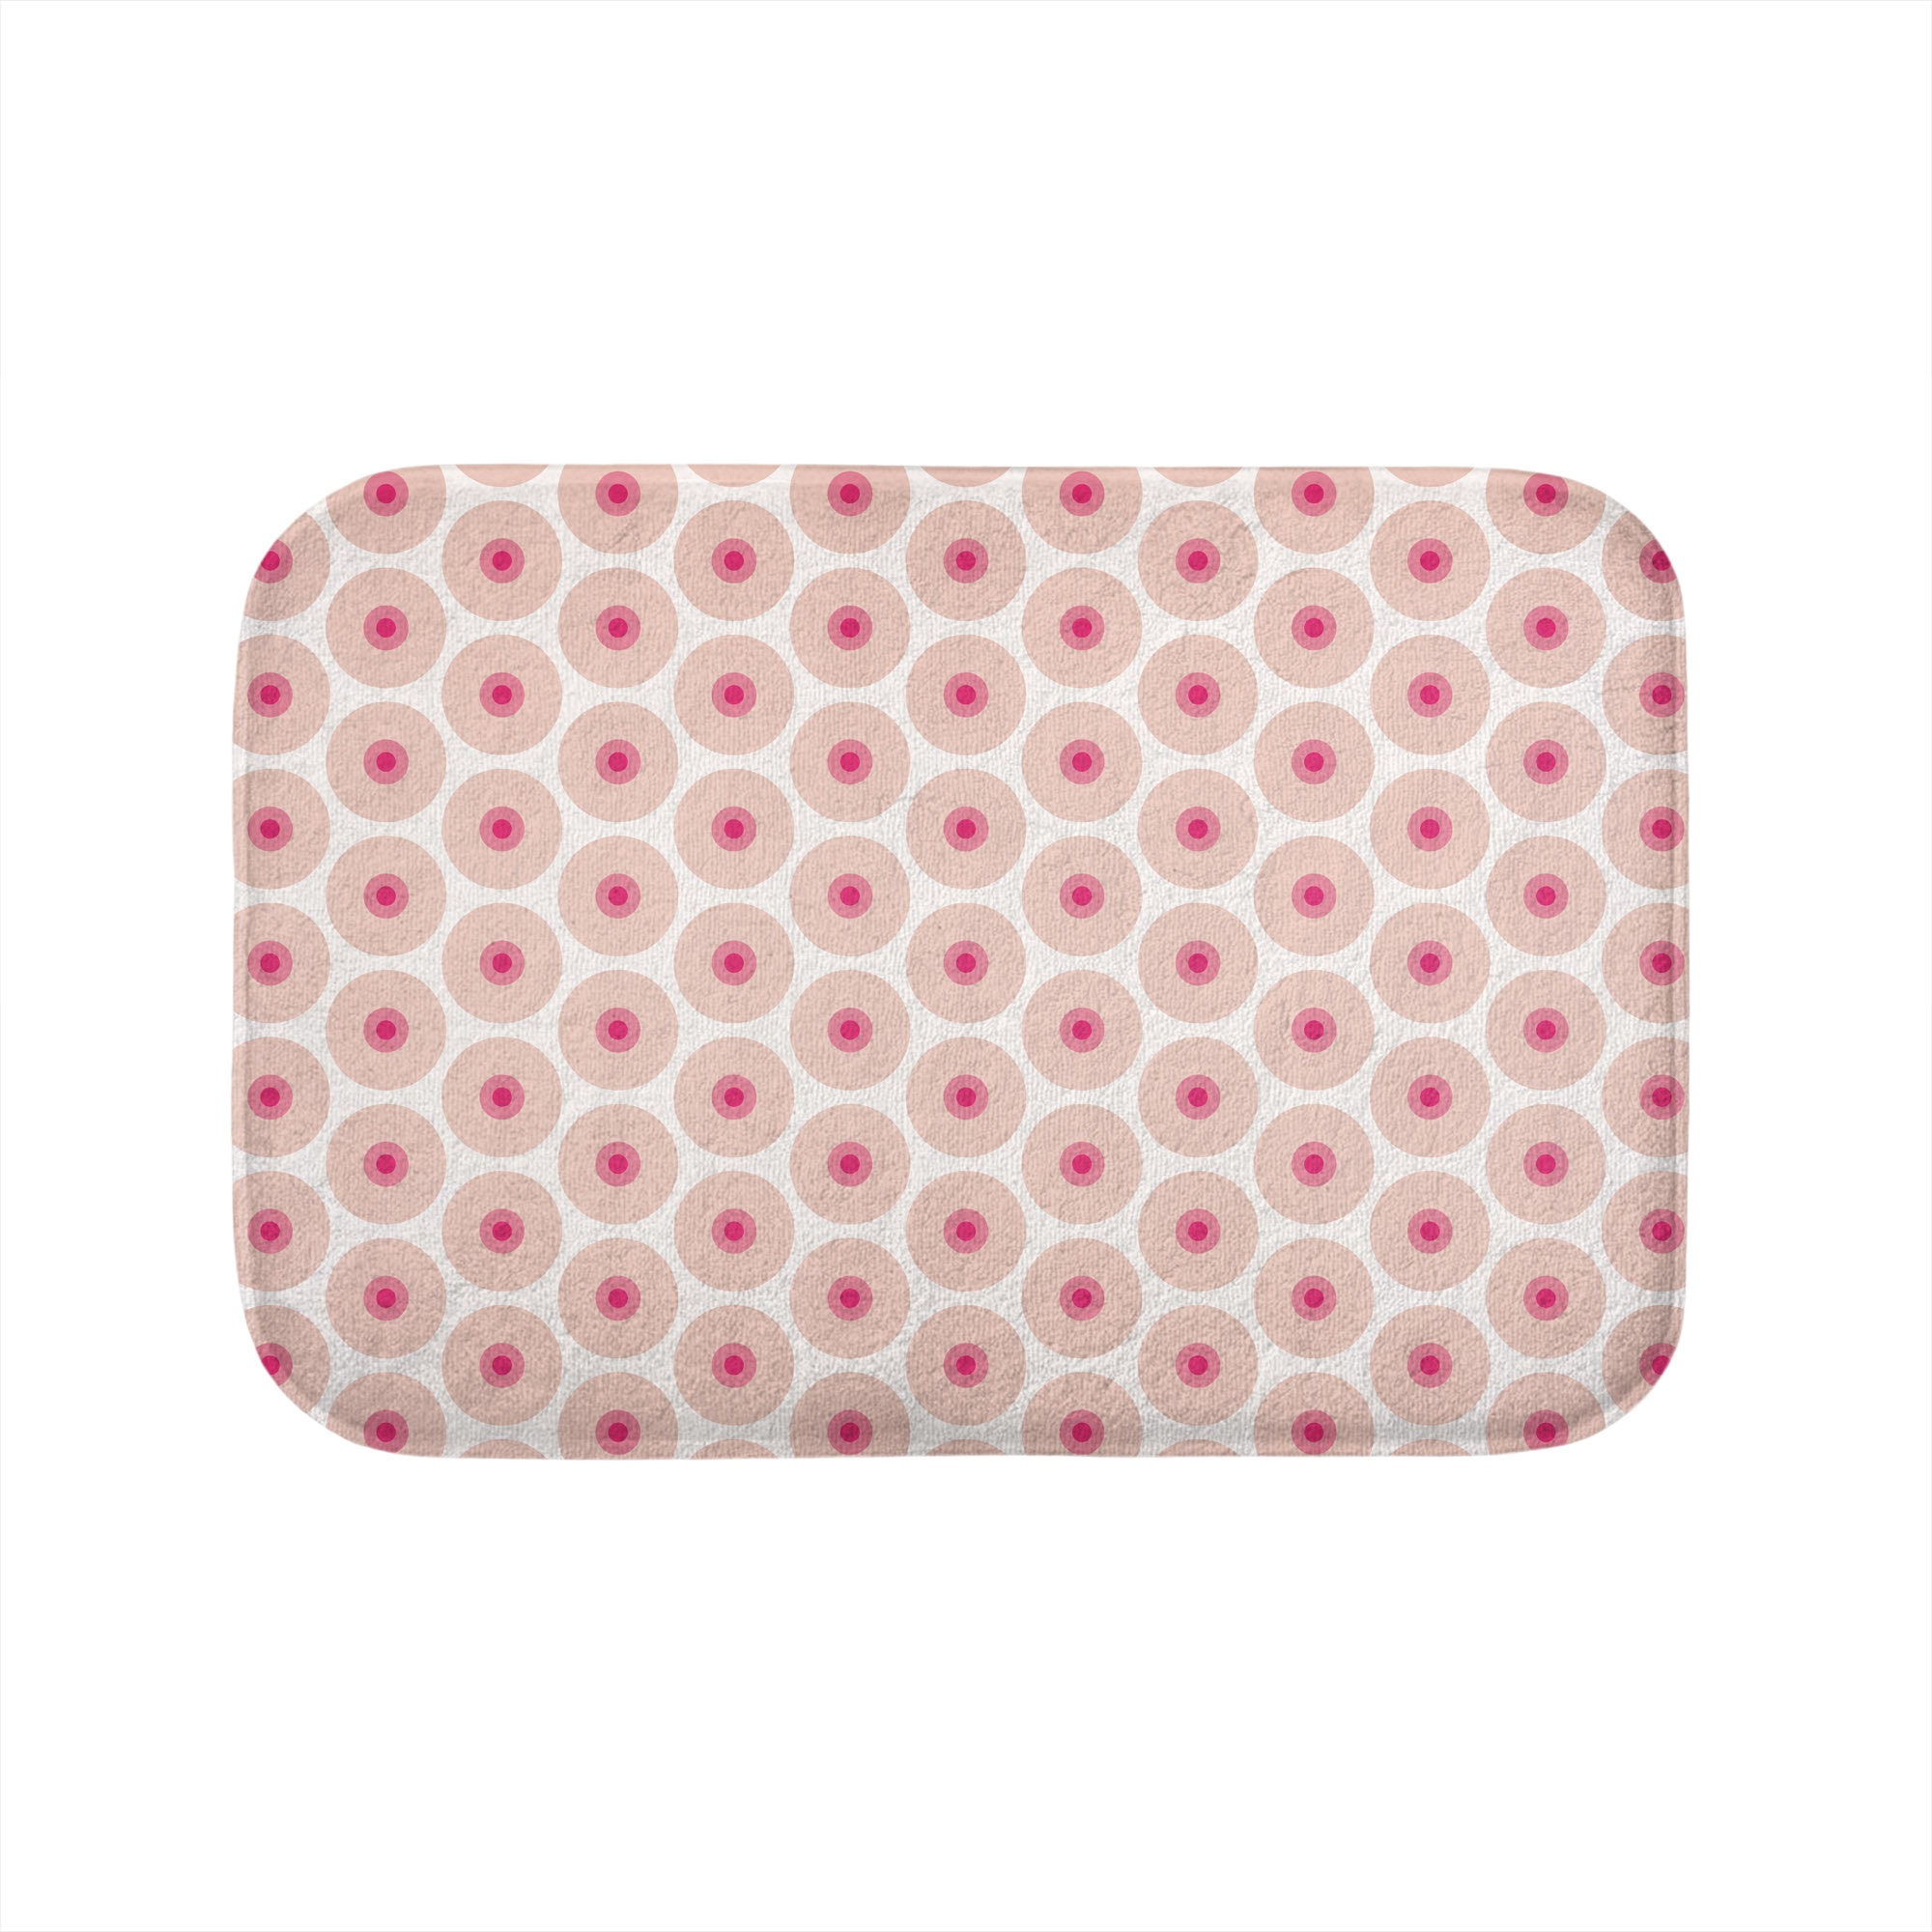 Nordic Fresh Pink Rose Pattern White Rug  Mat Antislip Carpet Bathroom Mat Decor